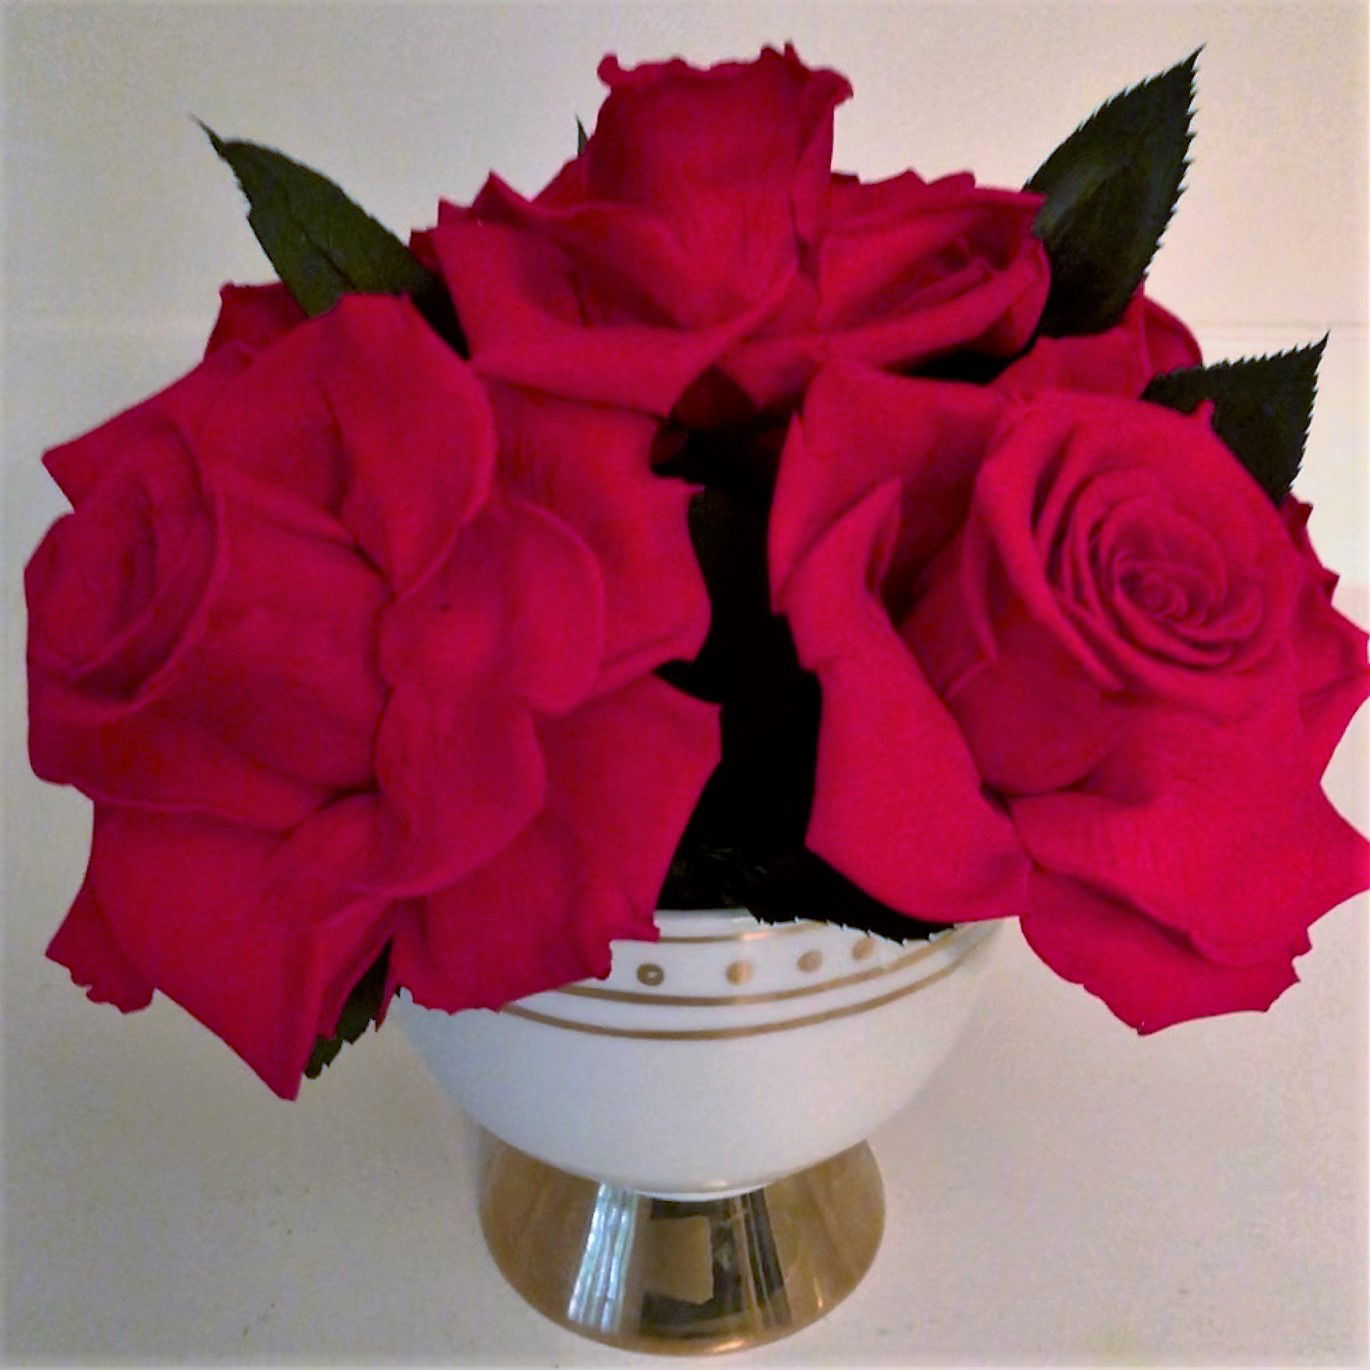 116 6 Red roses in Designer vase